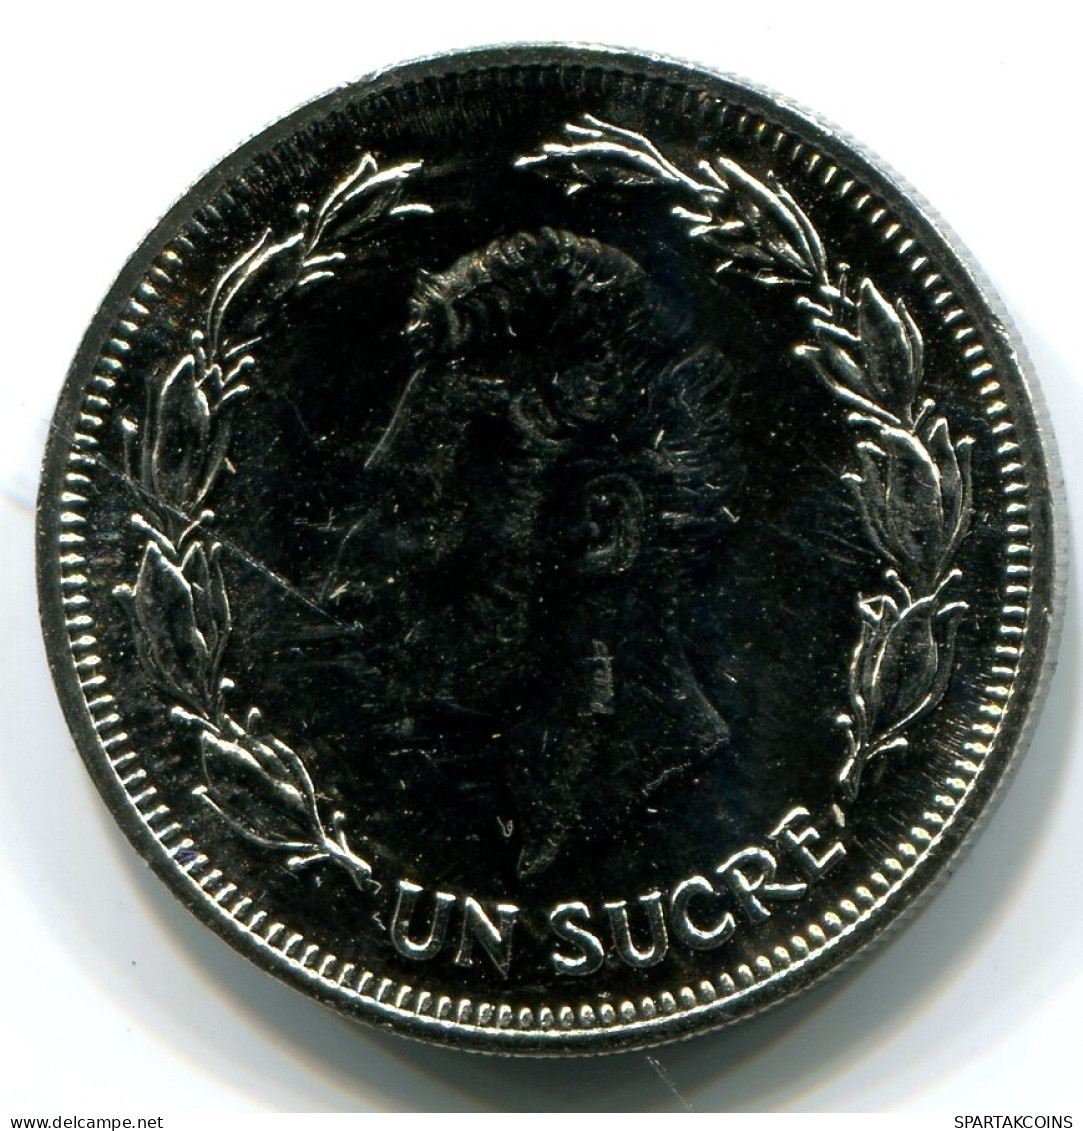 1 SUCRE 1986 ECUADOR UNC Coin #W11024.U - Ecuador